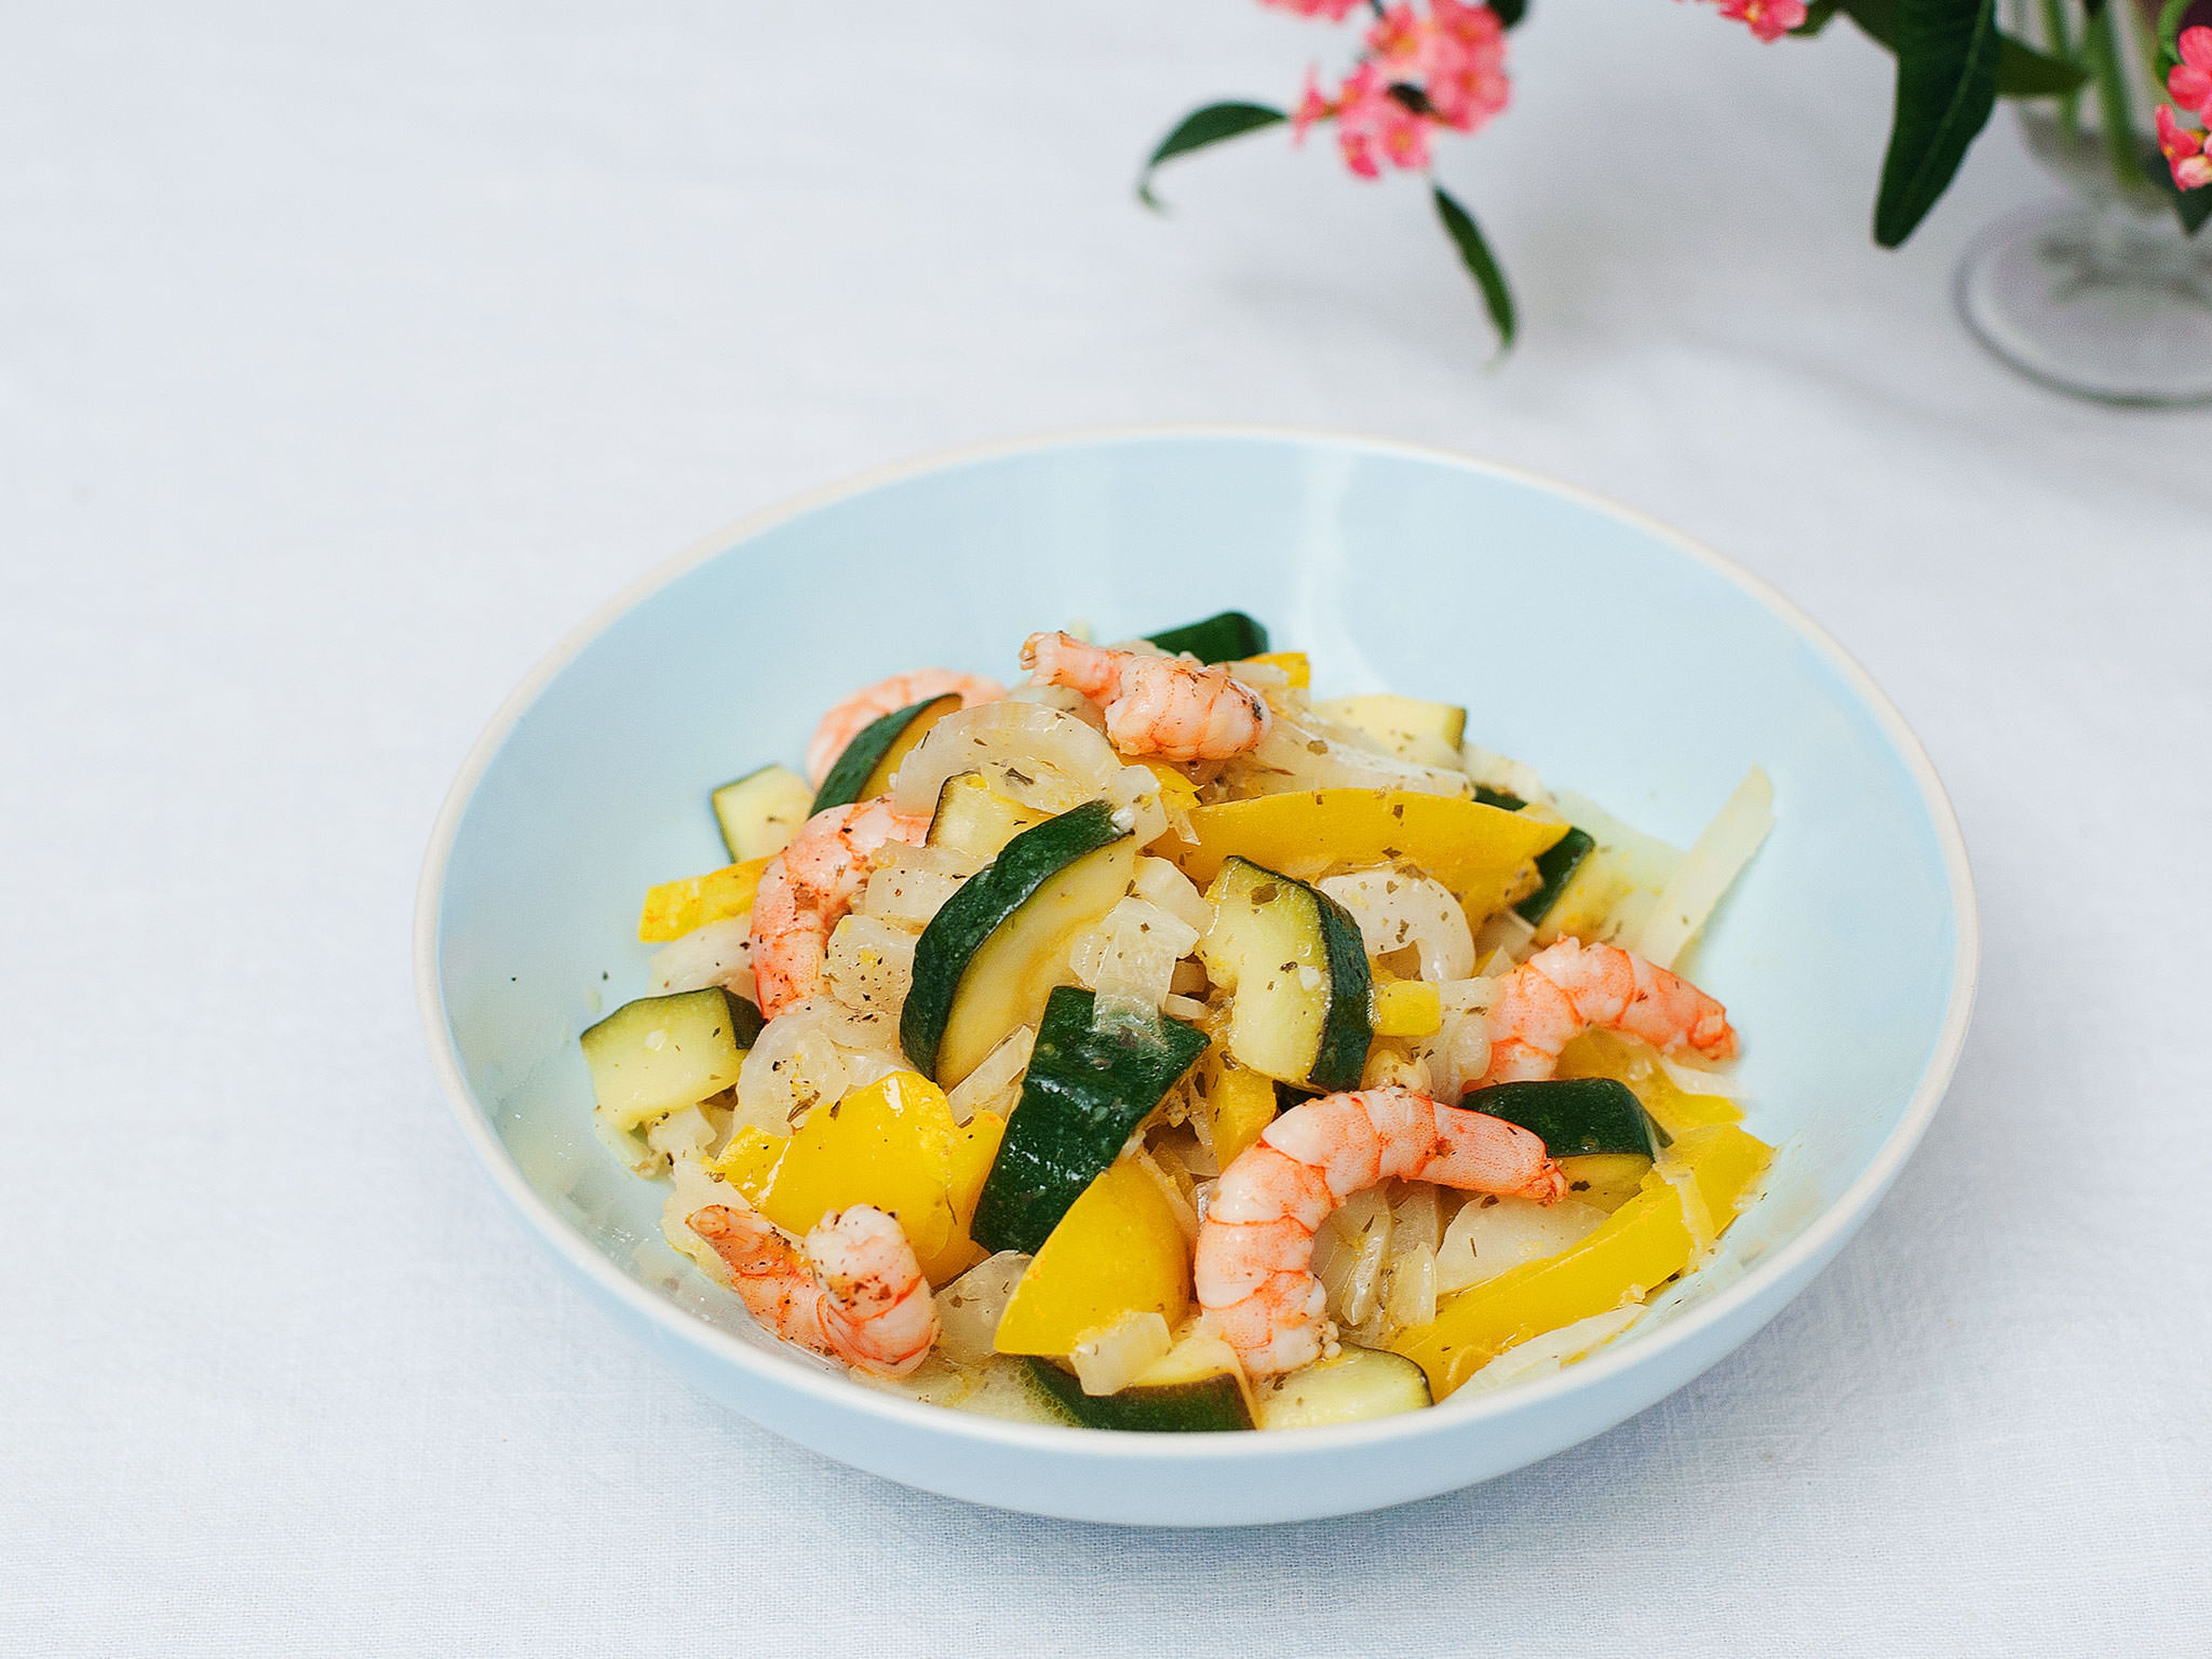 Marinated shrimp and vegetable salad